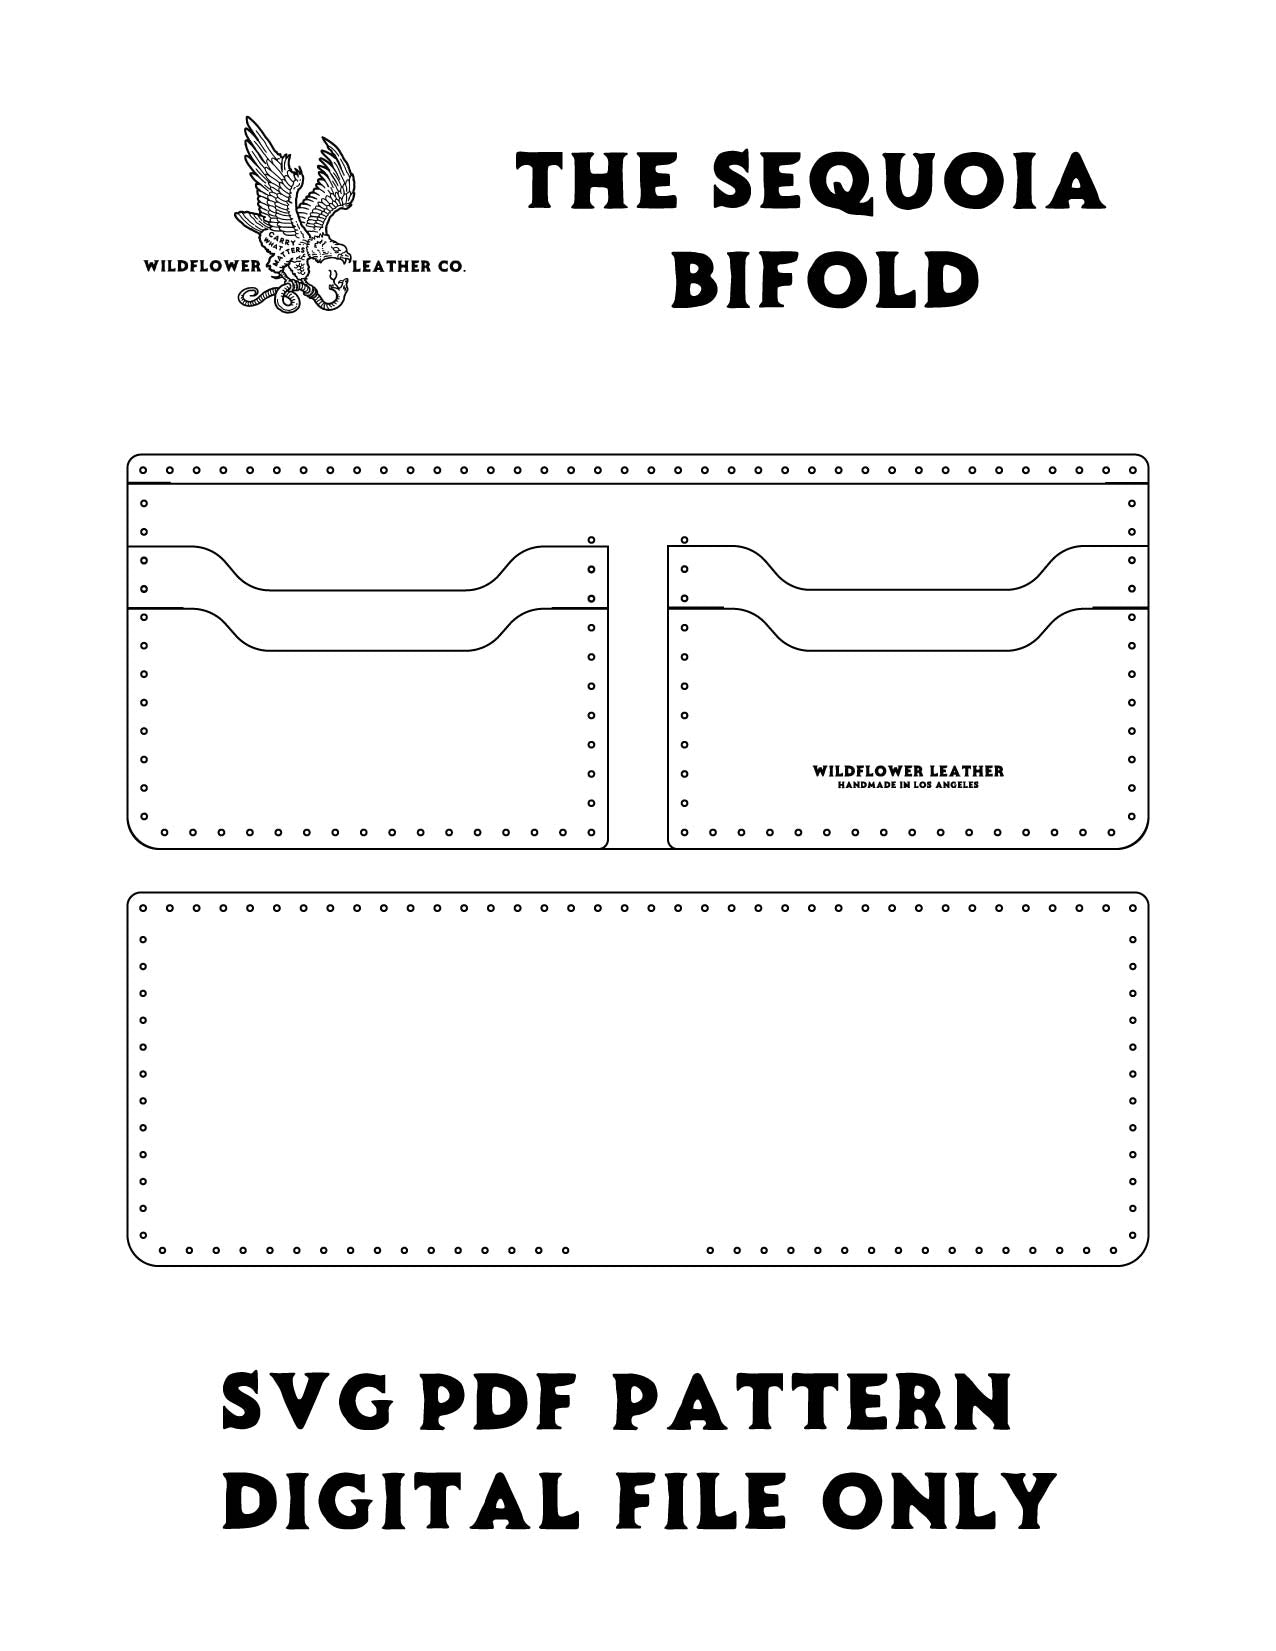 Making The Sequoia Bifold PDF/SVG Pattern